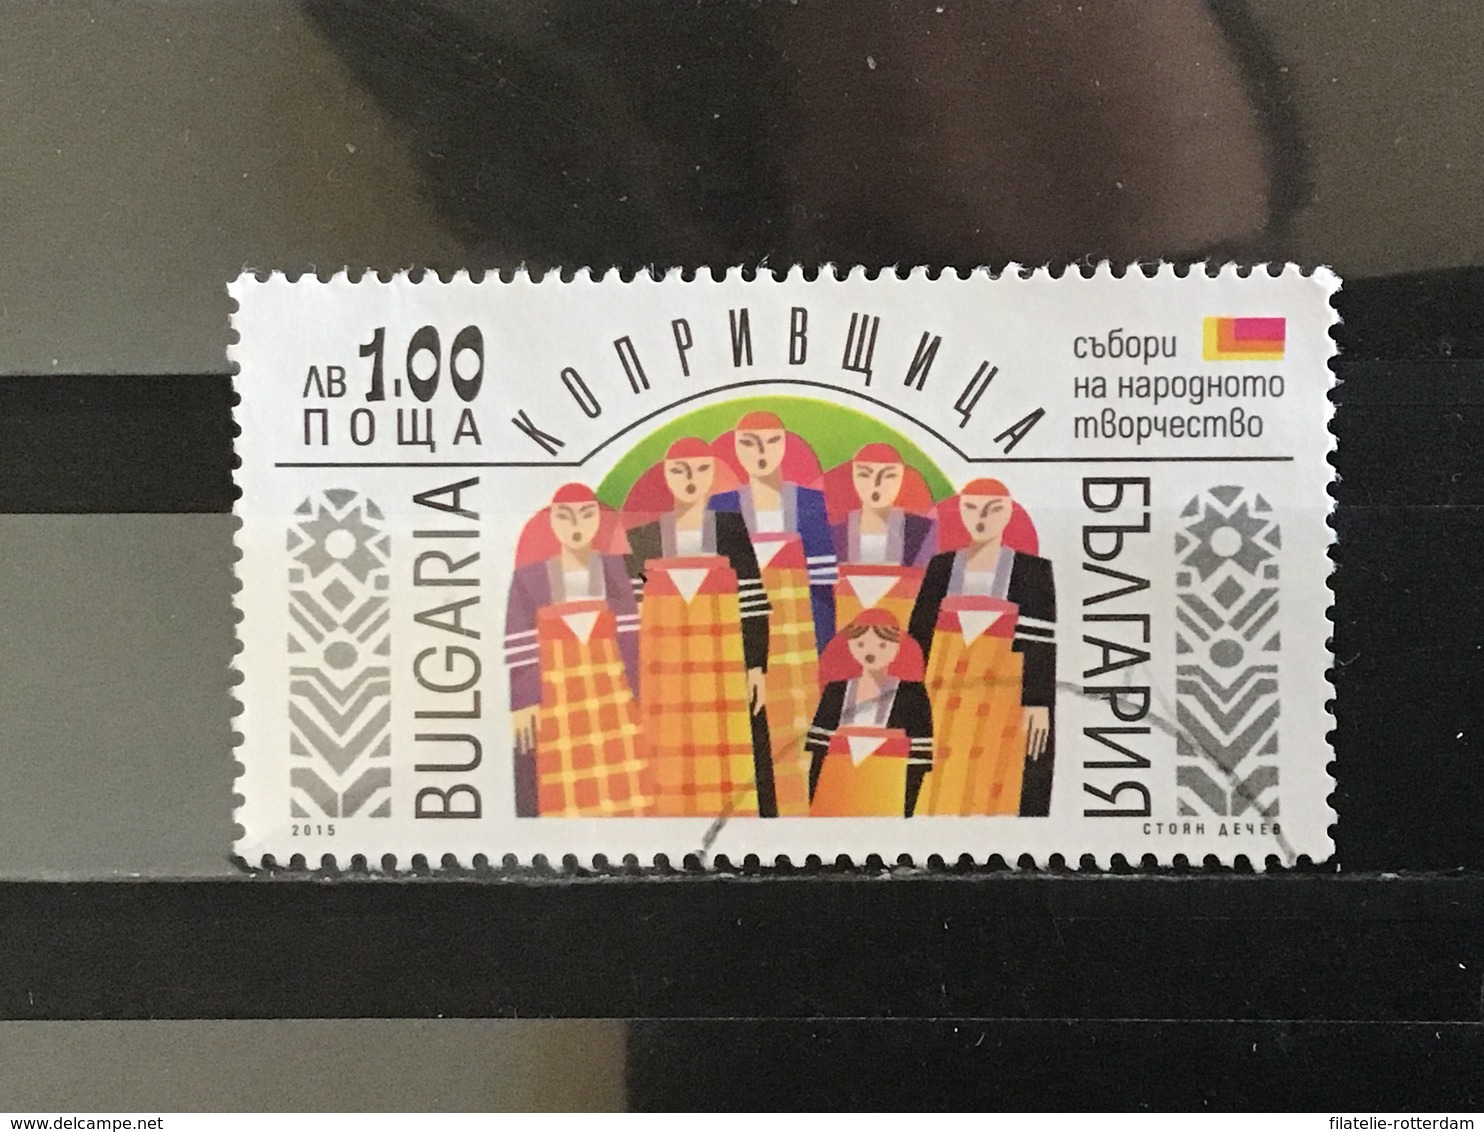 Bulgarije / Burgaria - Folklore (1) 2015 - Used Stamps